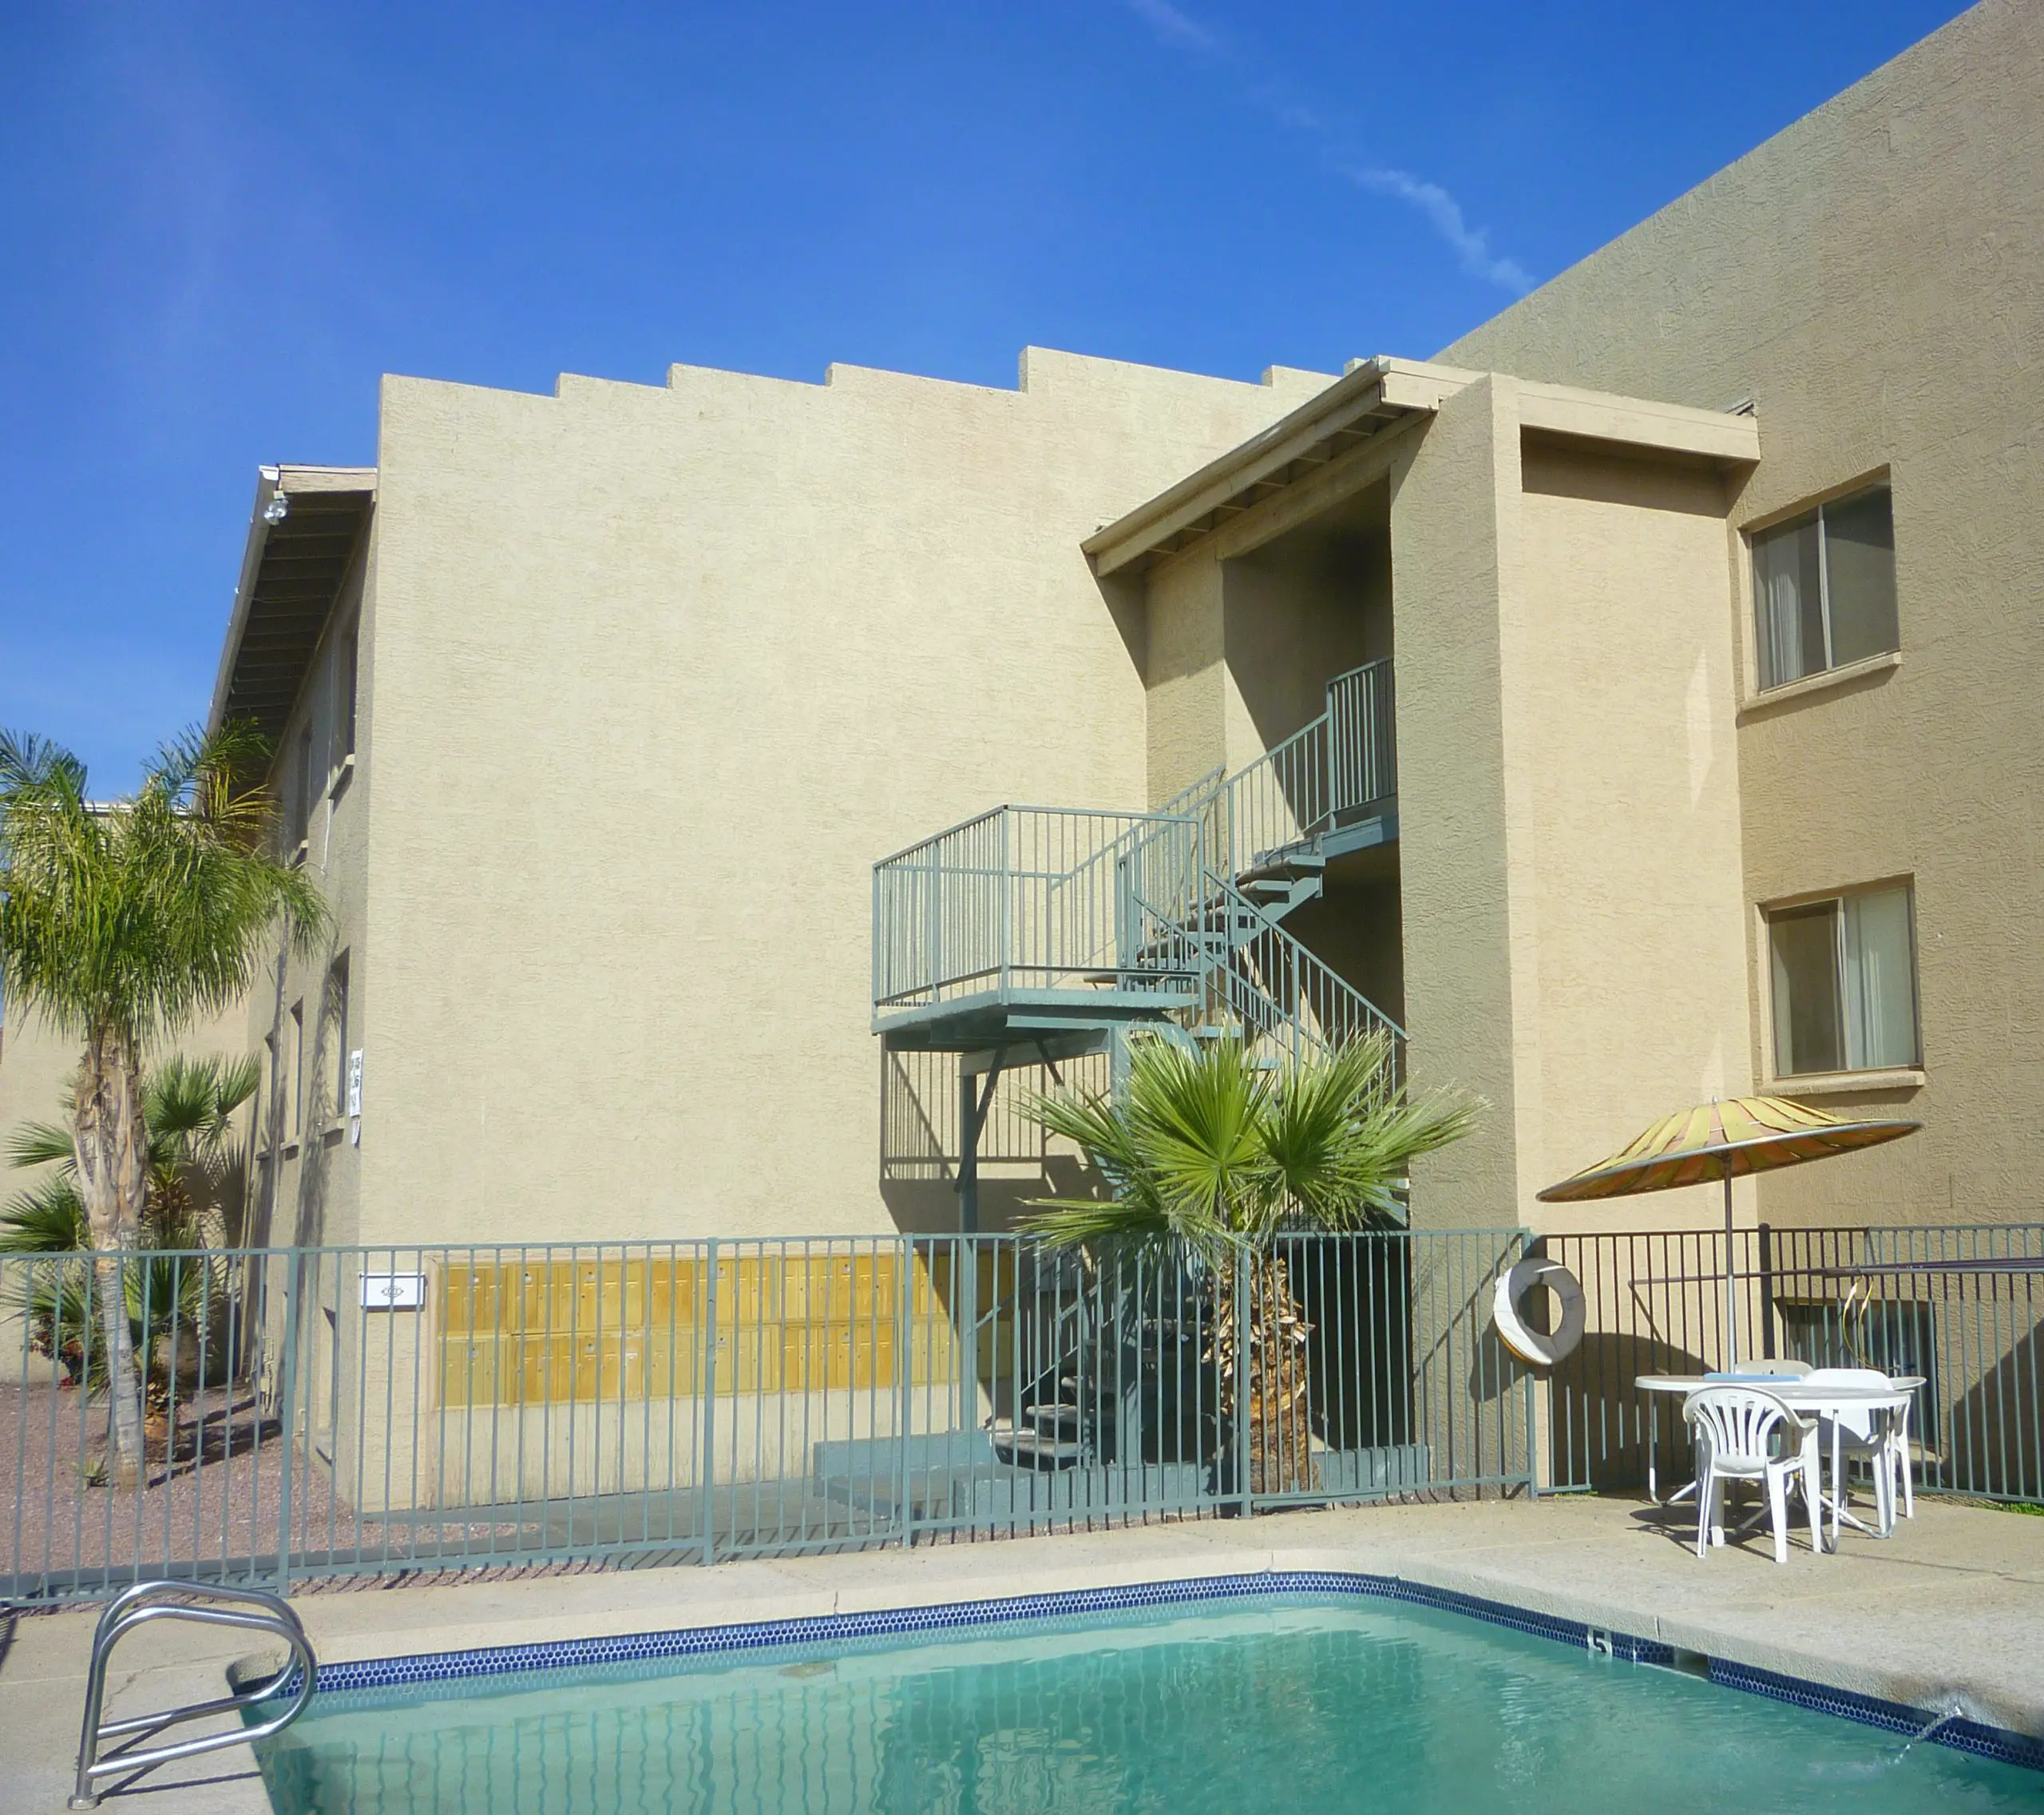 Phoenix  October 6, 2014  Winding Creek Apartments in Phoenix Arizona ...